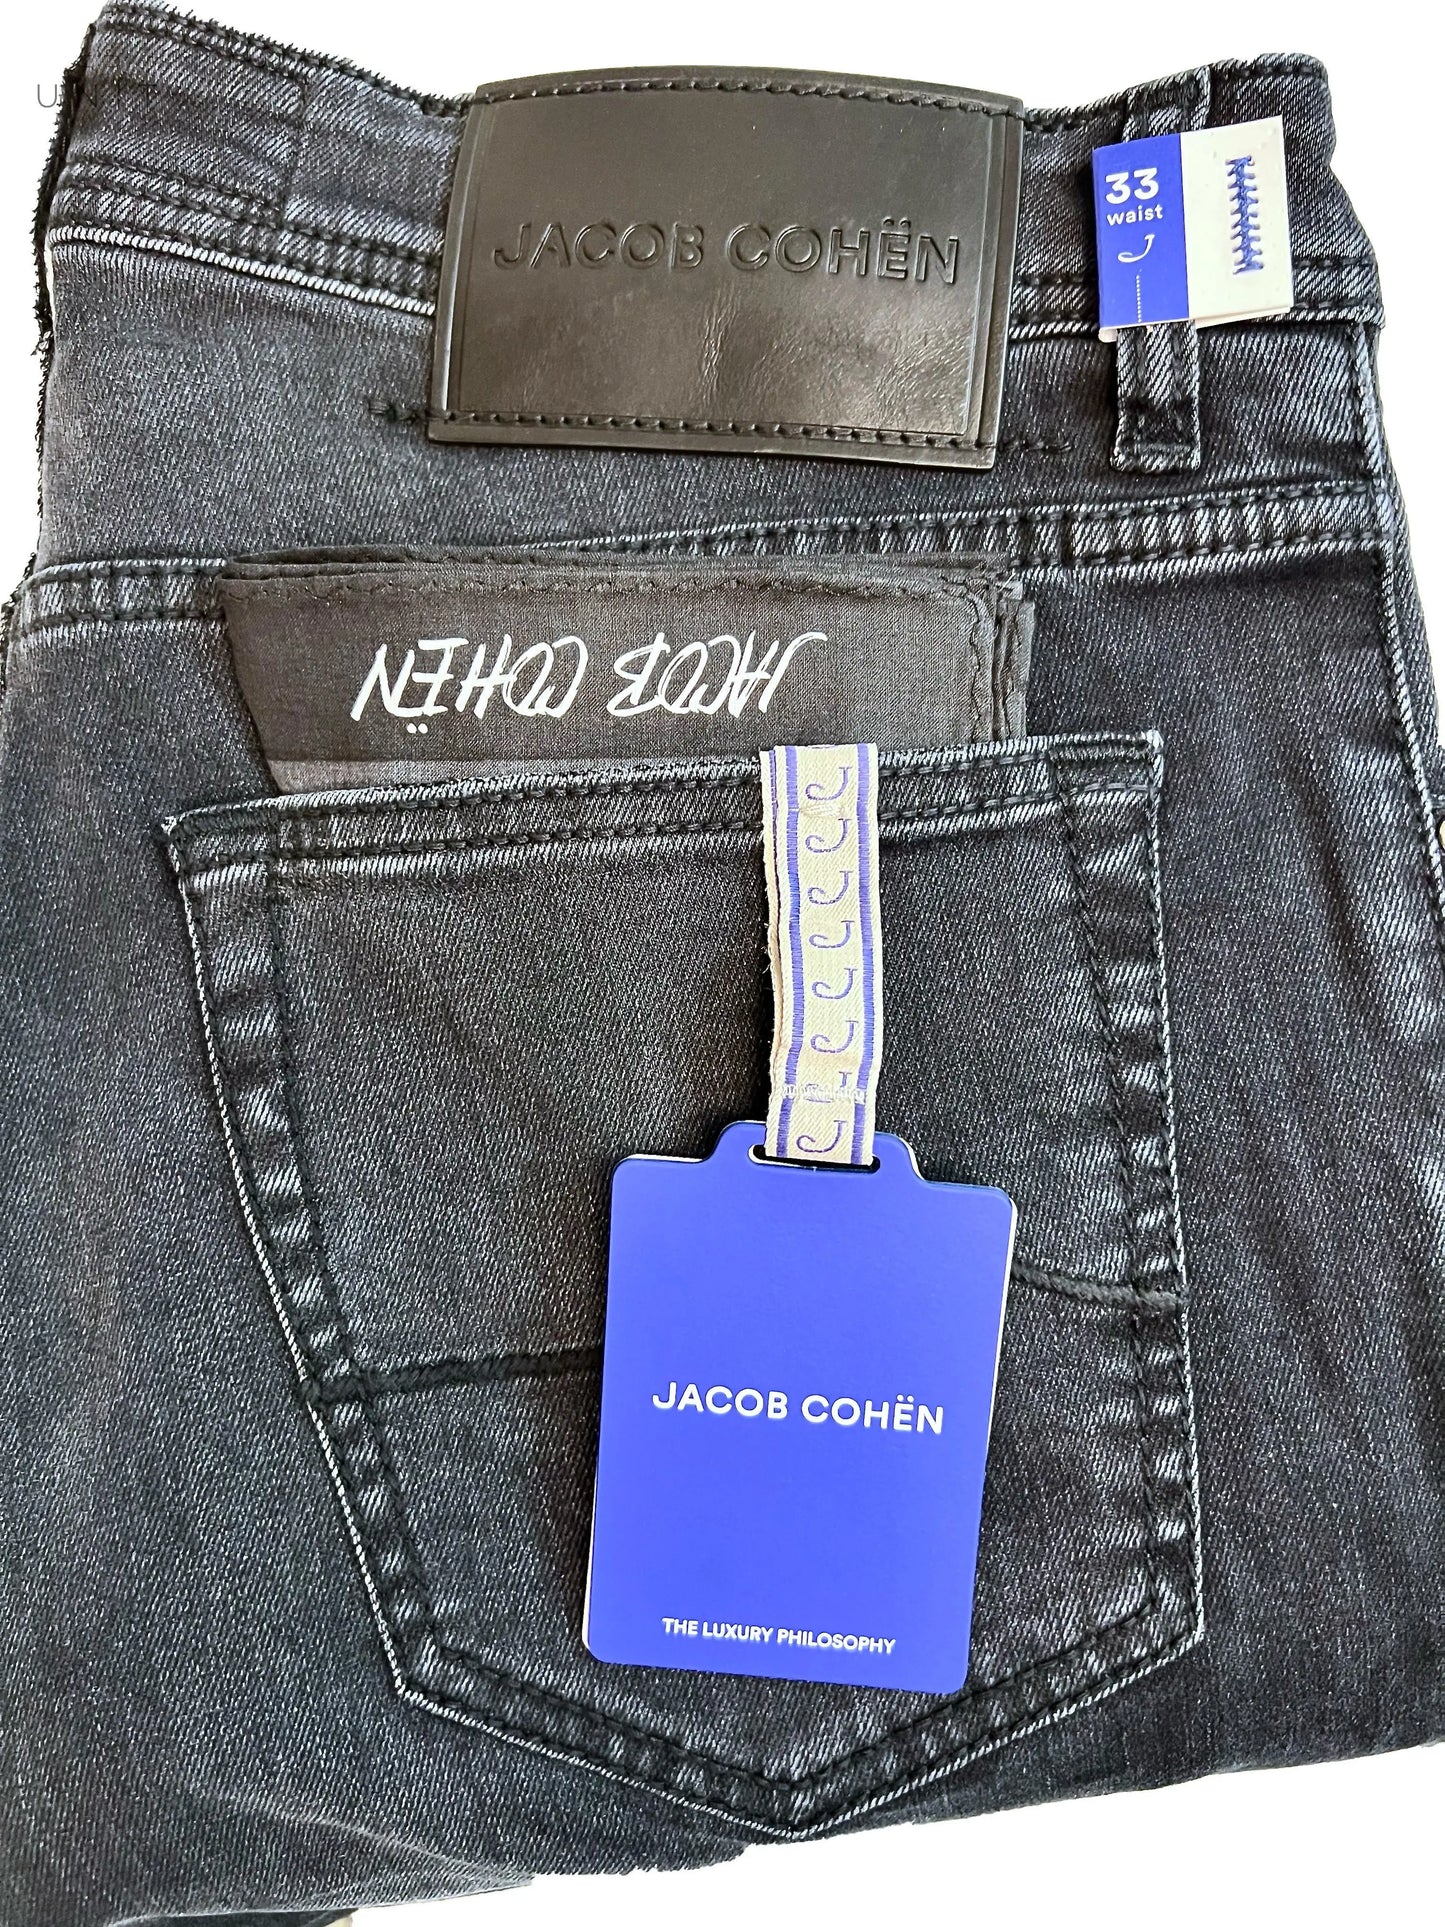 Jacob Cohen,Jeans,Jacob Cohen, NICK, black label, distressed, black washed,UNIT Hamburg